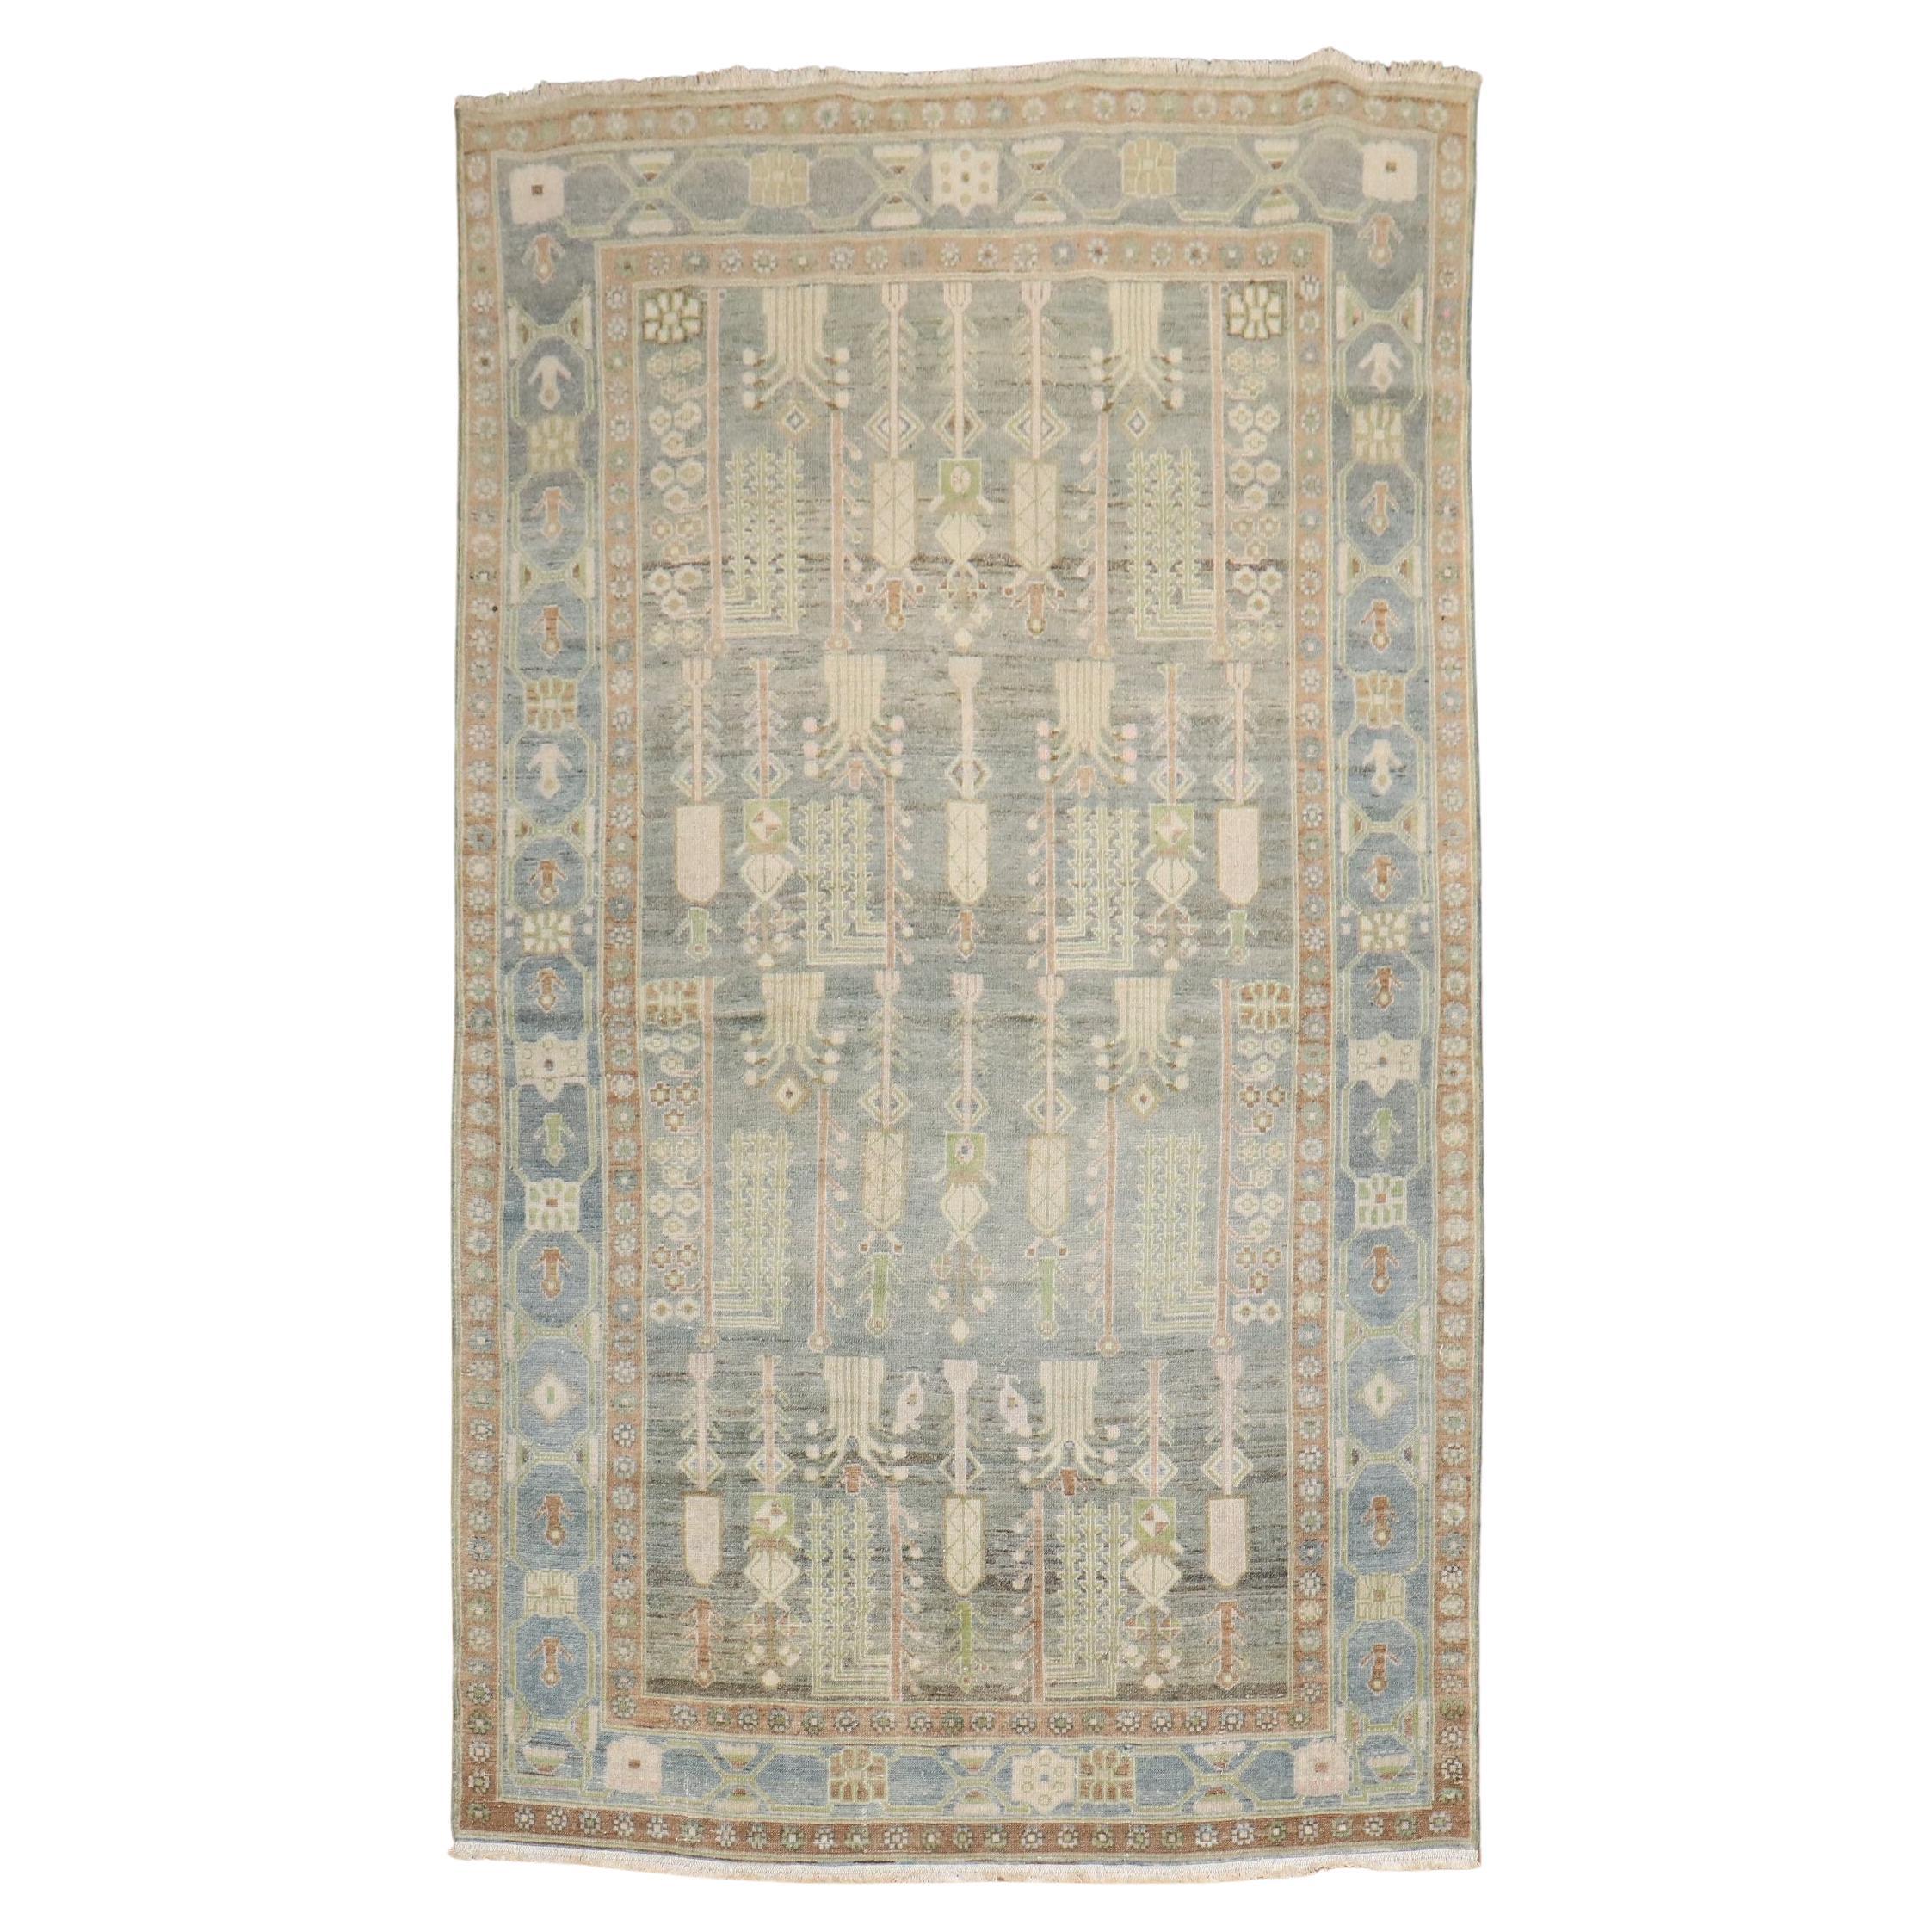 Antiker persischer Malayer-Teppich aus der Zabihi-Kollektion aus Weeping-Wow-Baum